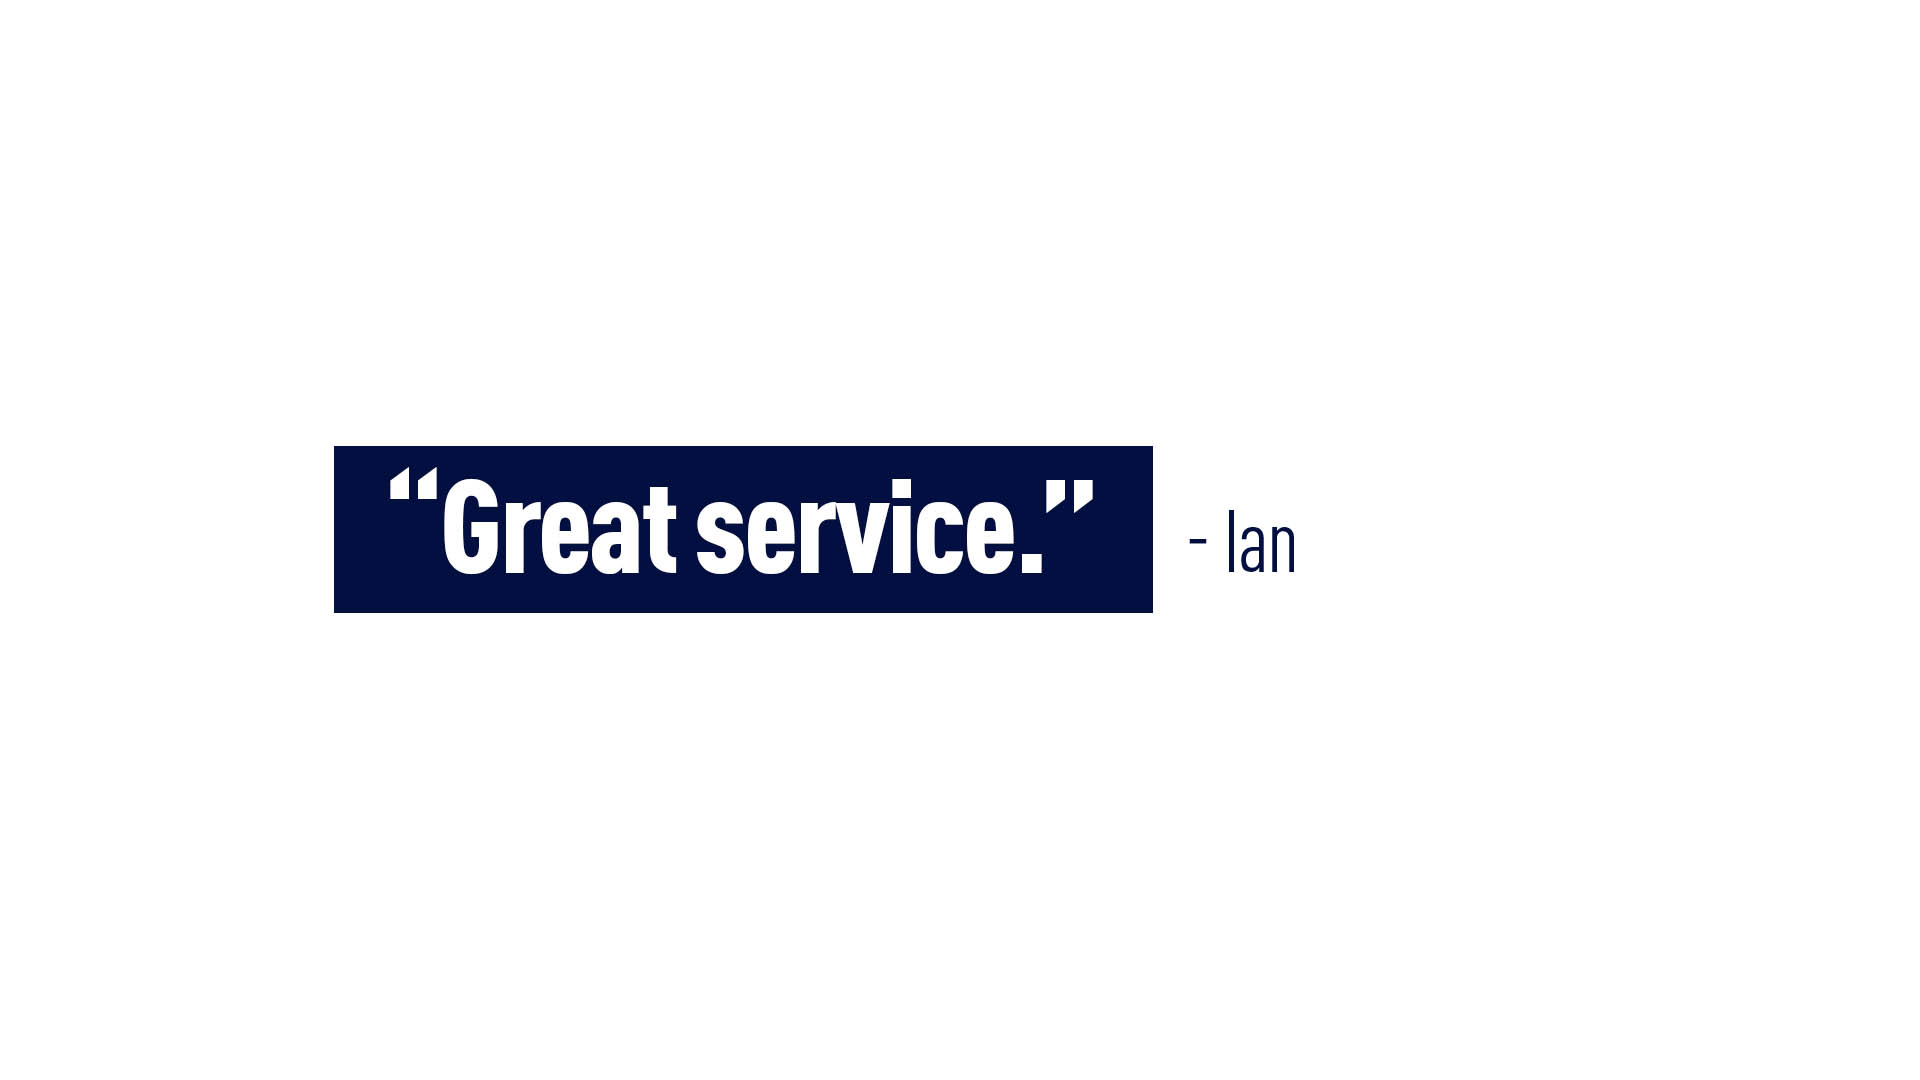 “Great service.” Ian